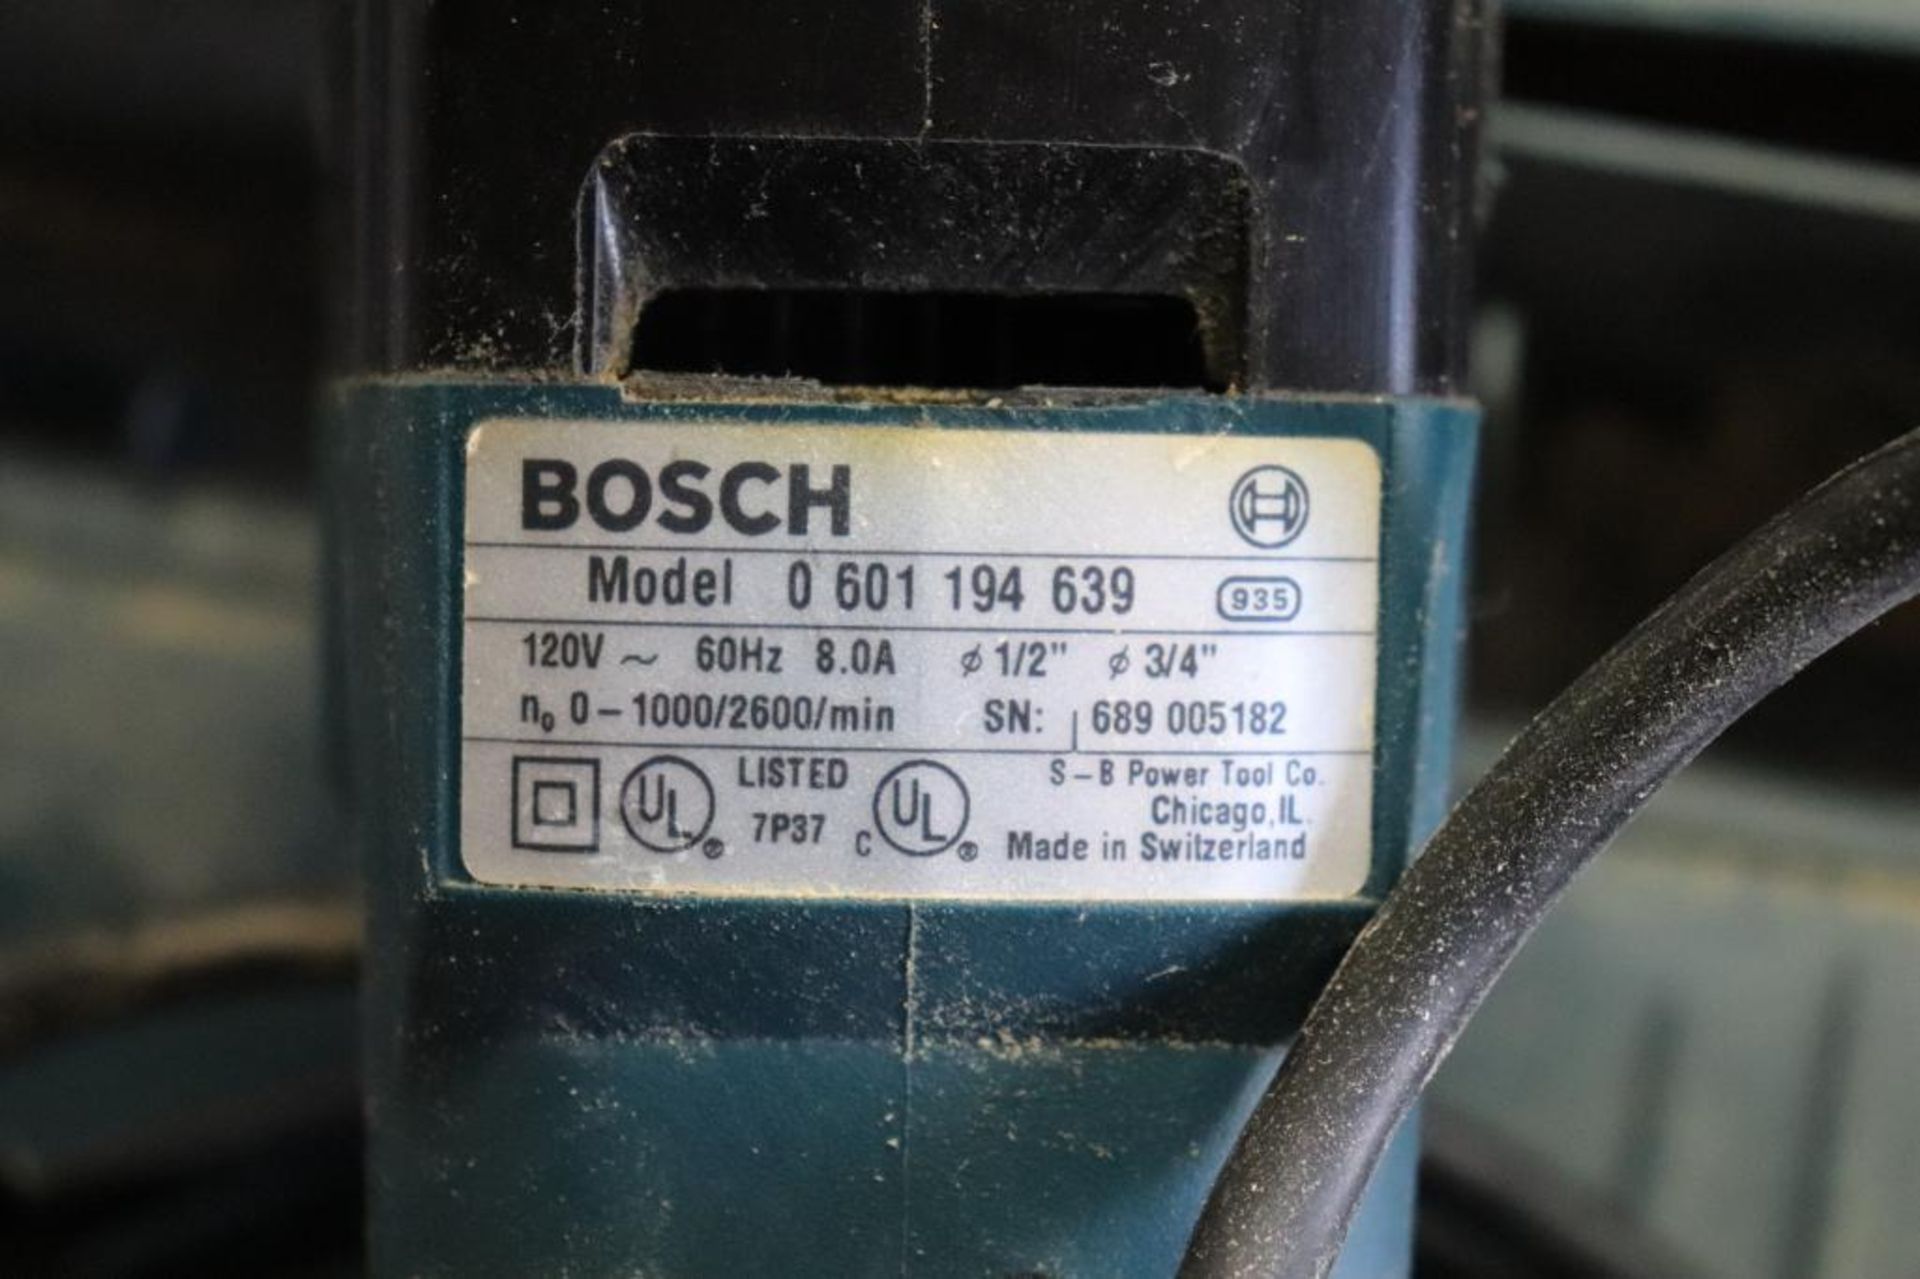 Bosch 0601 194 639, 2 speed drill - Image 4 of 4